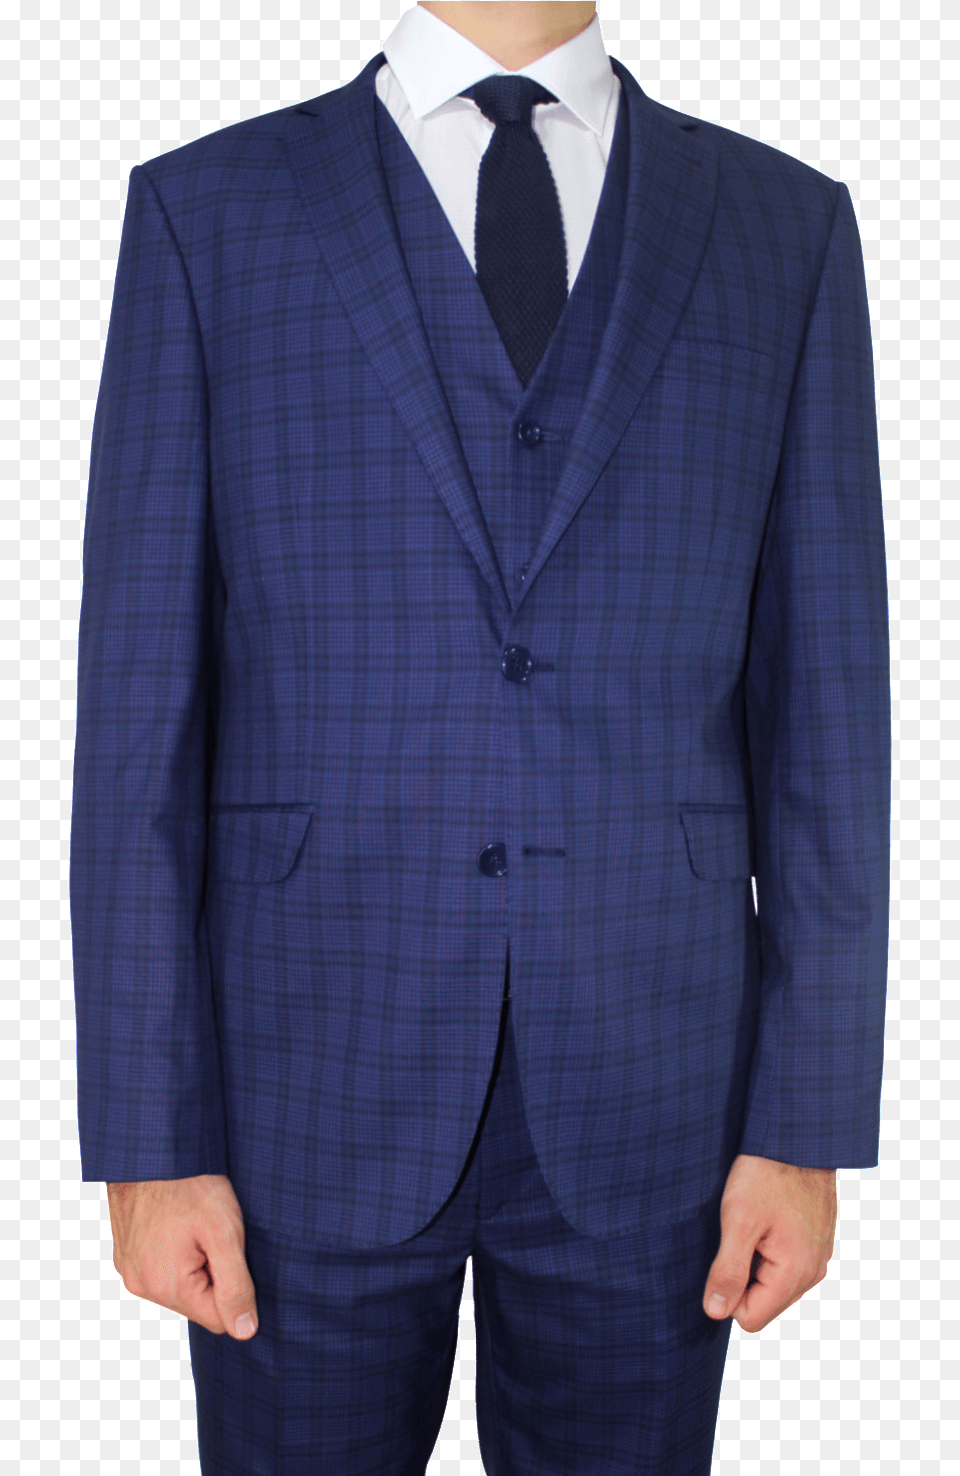 Blue Suit Image Check 3 Piece Suit Blue, Clothing, Formal Wear, Tuxedo, Coat Free Png Download